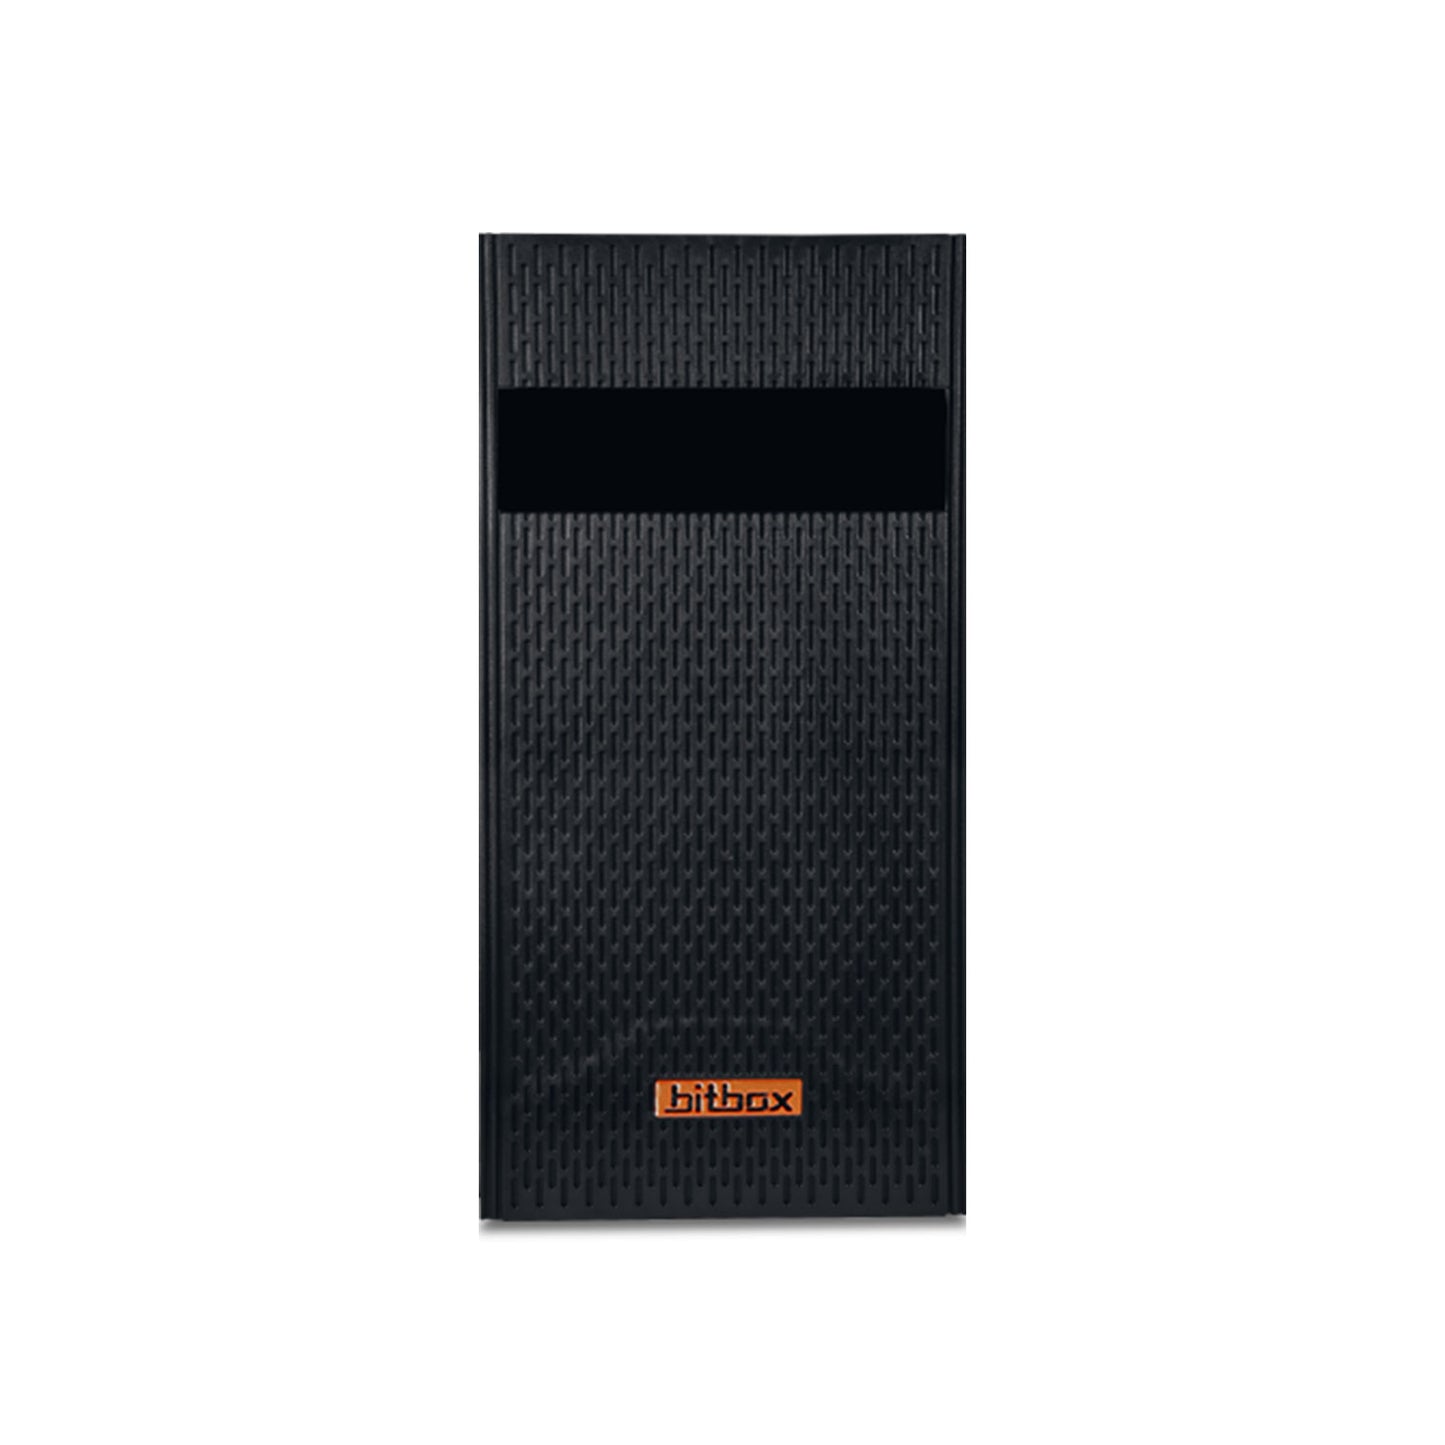 BitBox-PC Micro Tower MT-3336, Intel i3 12th Gen, 16GB RAM, 1TB SSD with 3-Year Warranty